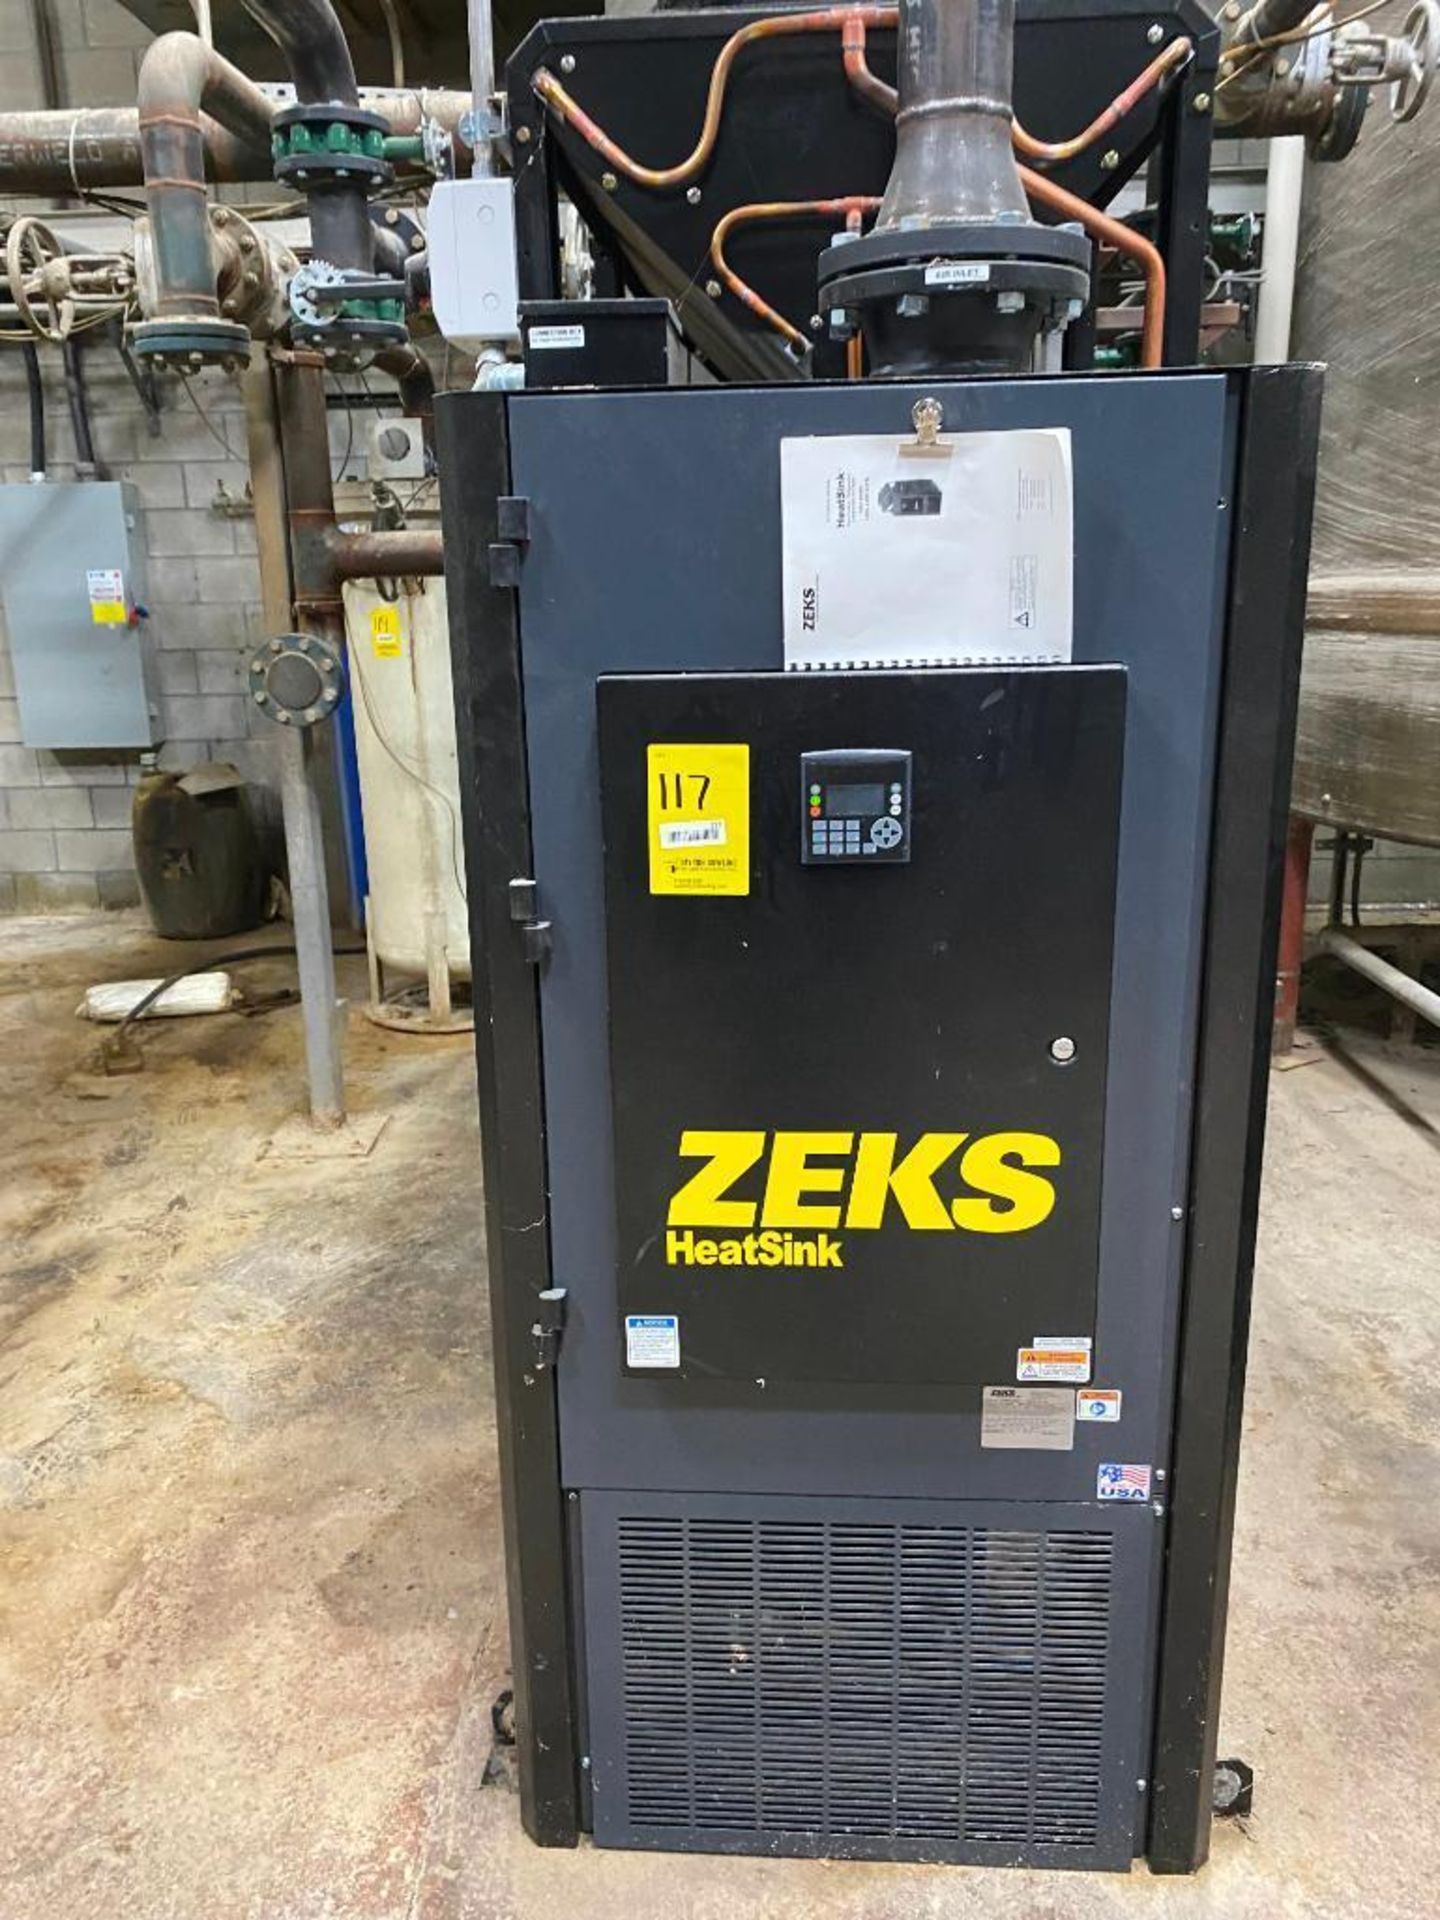 ZEKS HeatSink Compressed Air Dryer, Model 2400HSGA40G000, S/N WCH1064991, 460 V, 200 Max. PSI - Image 2 of 4